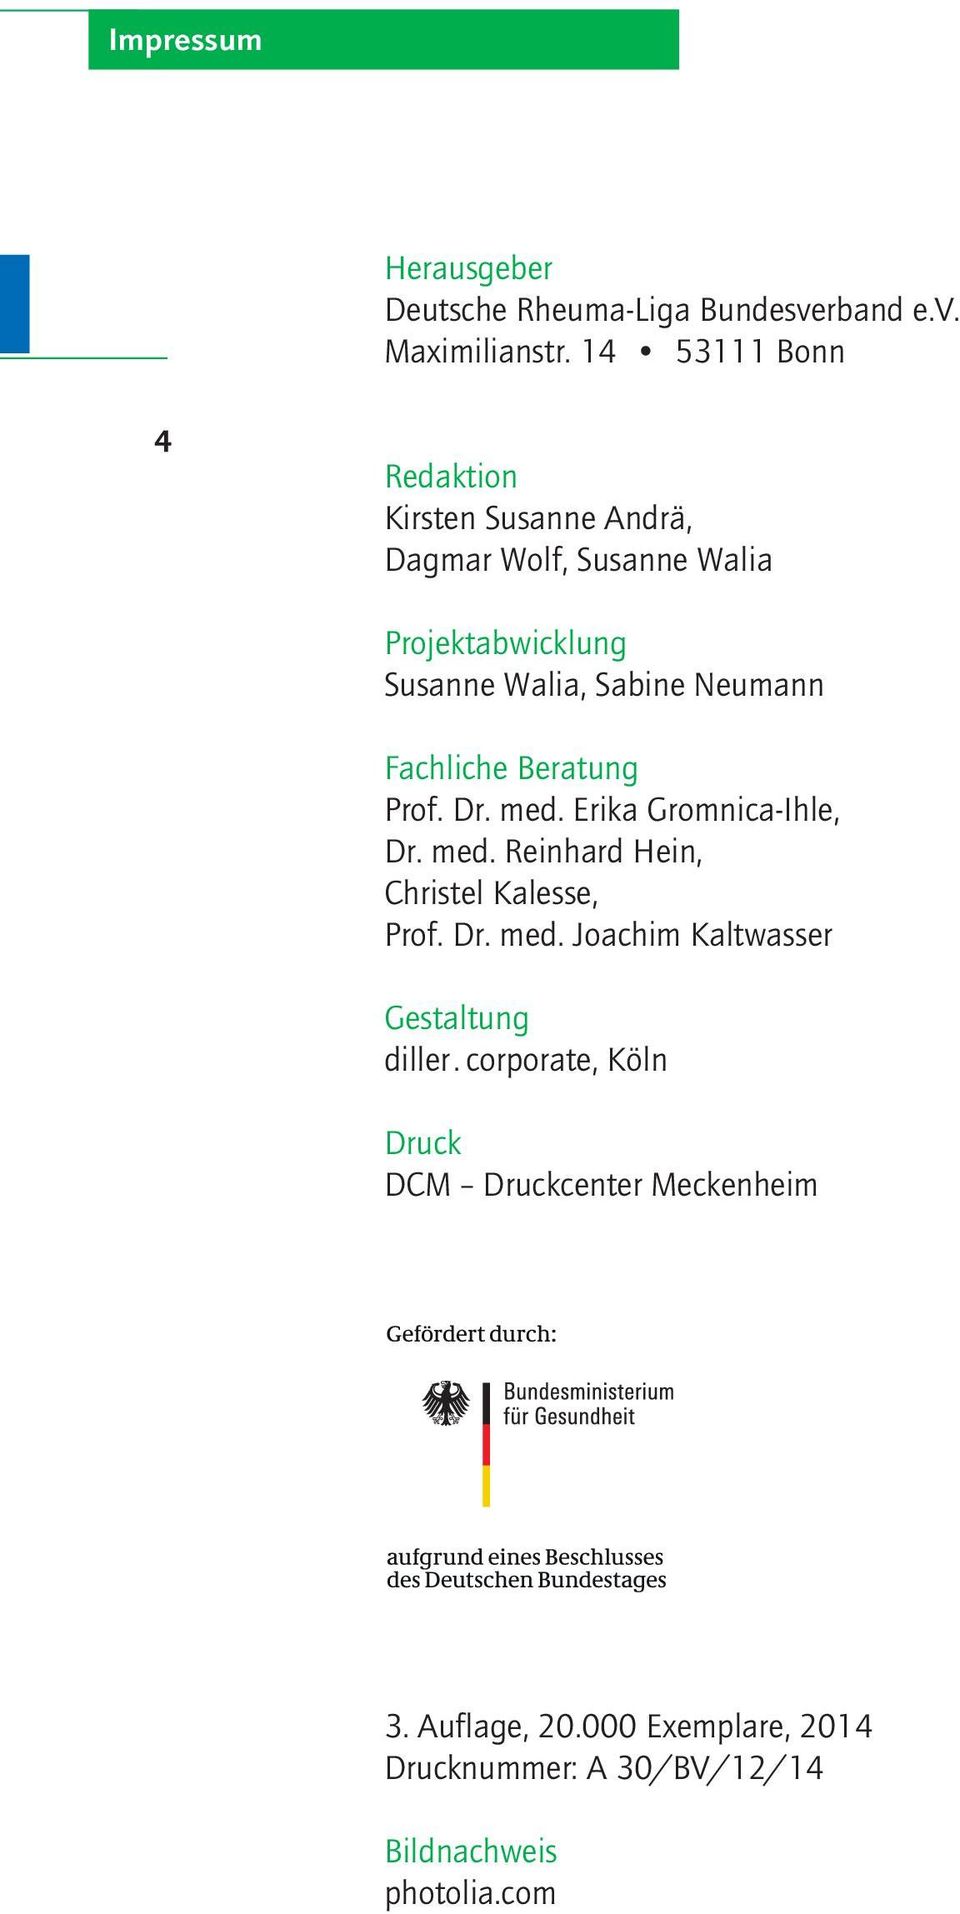 Neumann Fachliche Beratung Prof. Dr. med. Erika Gromnica-Ihle, Dr. med. Reinhard Hein, Christel Kalesse, Prof. Dr. med. Joachim Kaltwasser Gestaltung diller.